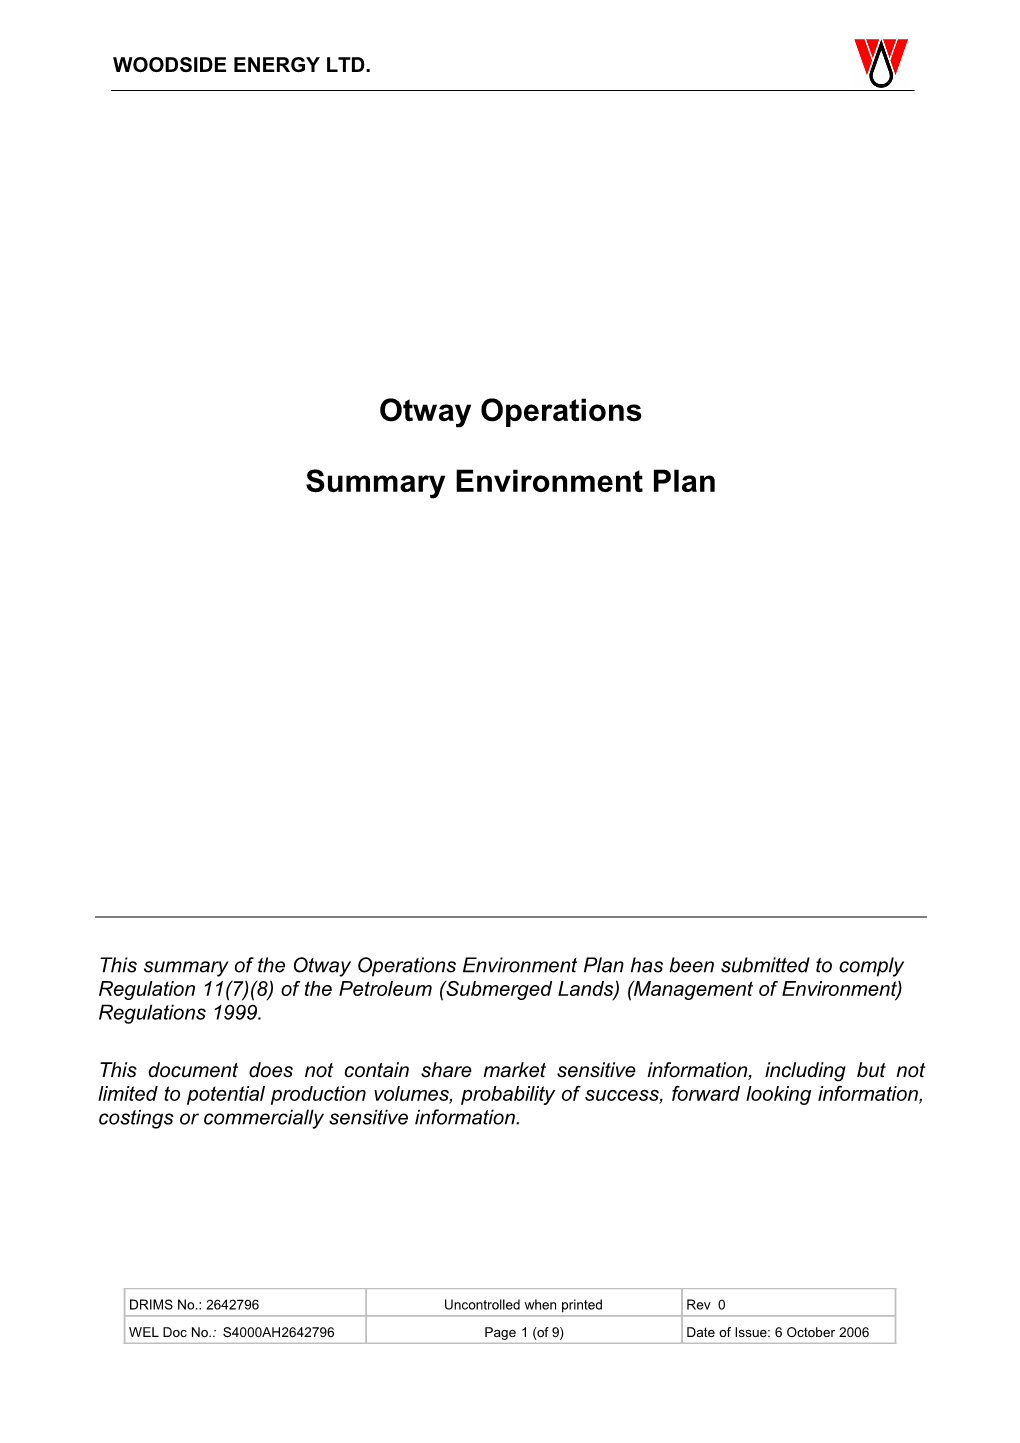 Otway Operations Summary Environment Plan